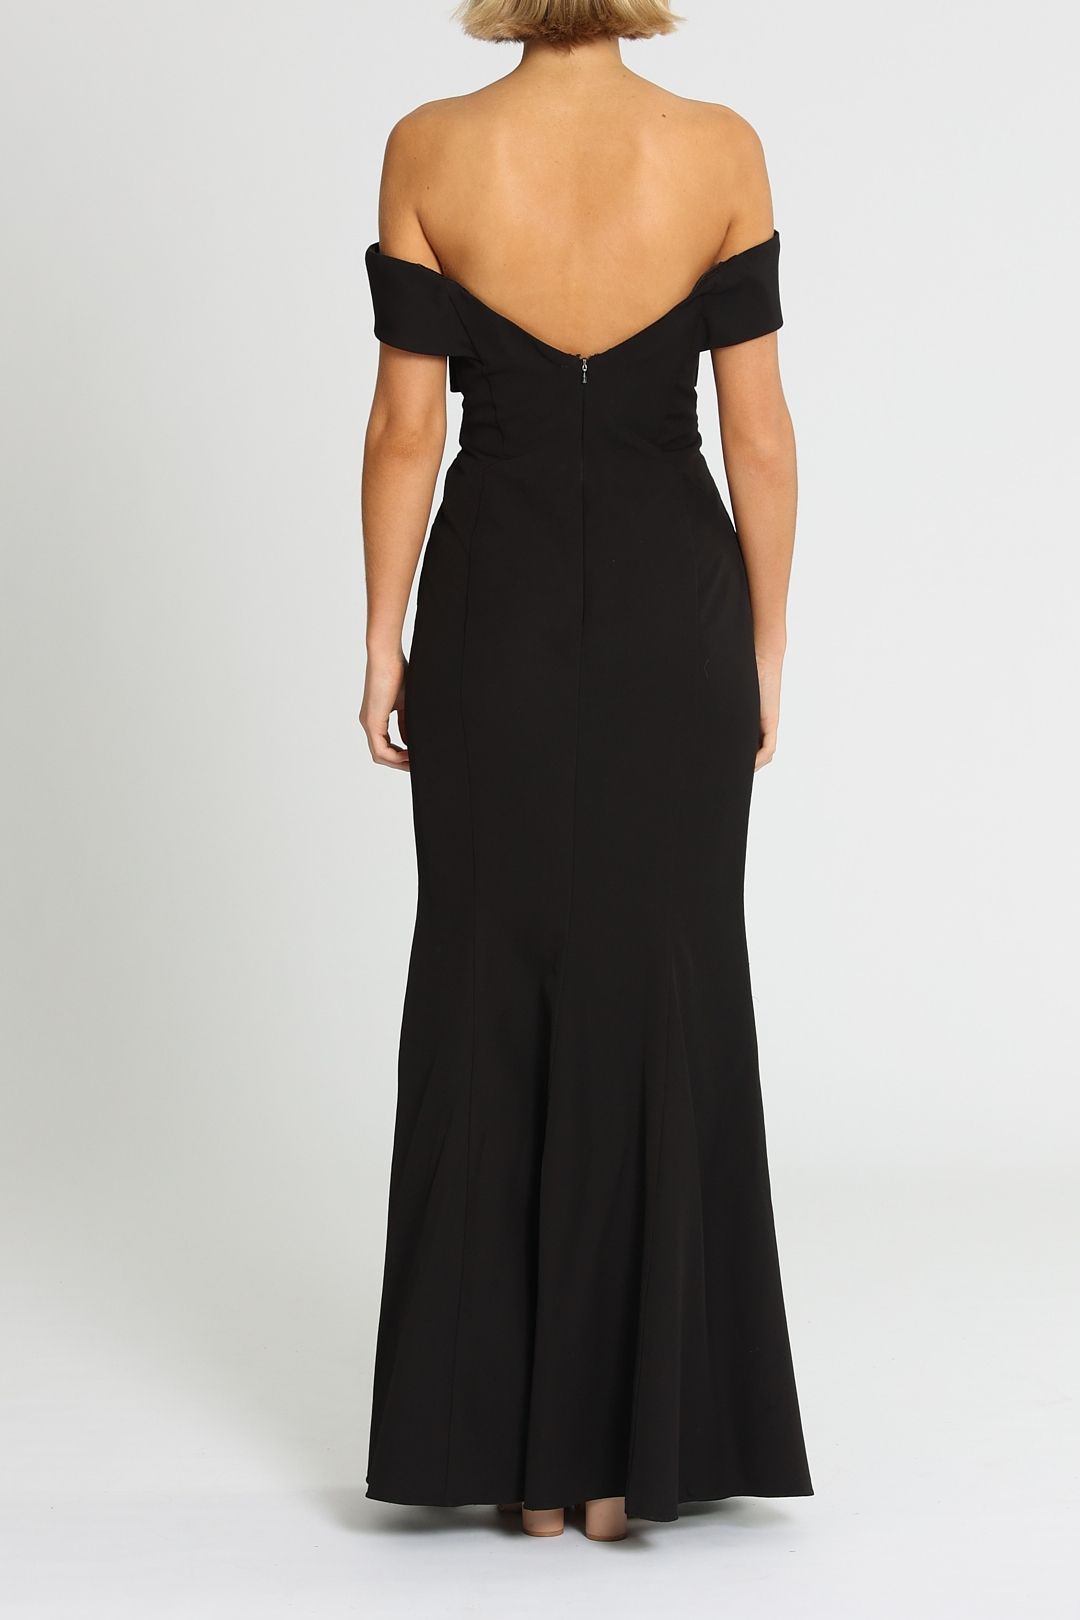 Jacinta Gown in Black by George for Rent | GlamCorner